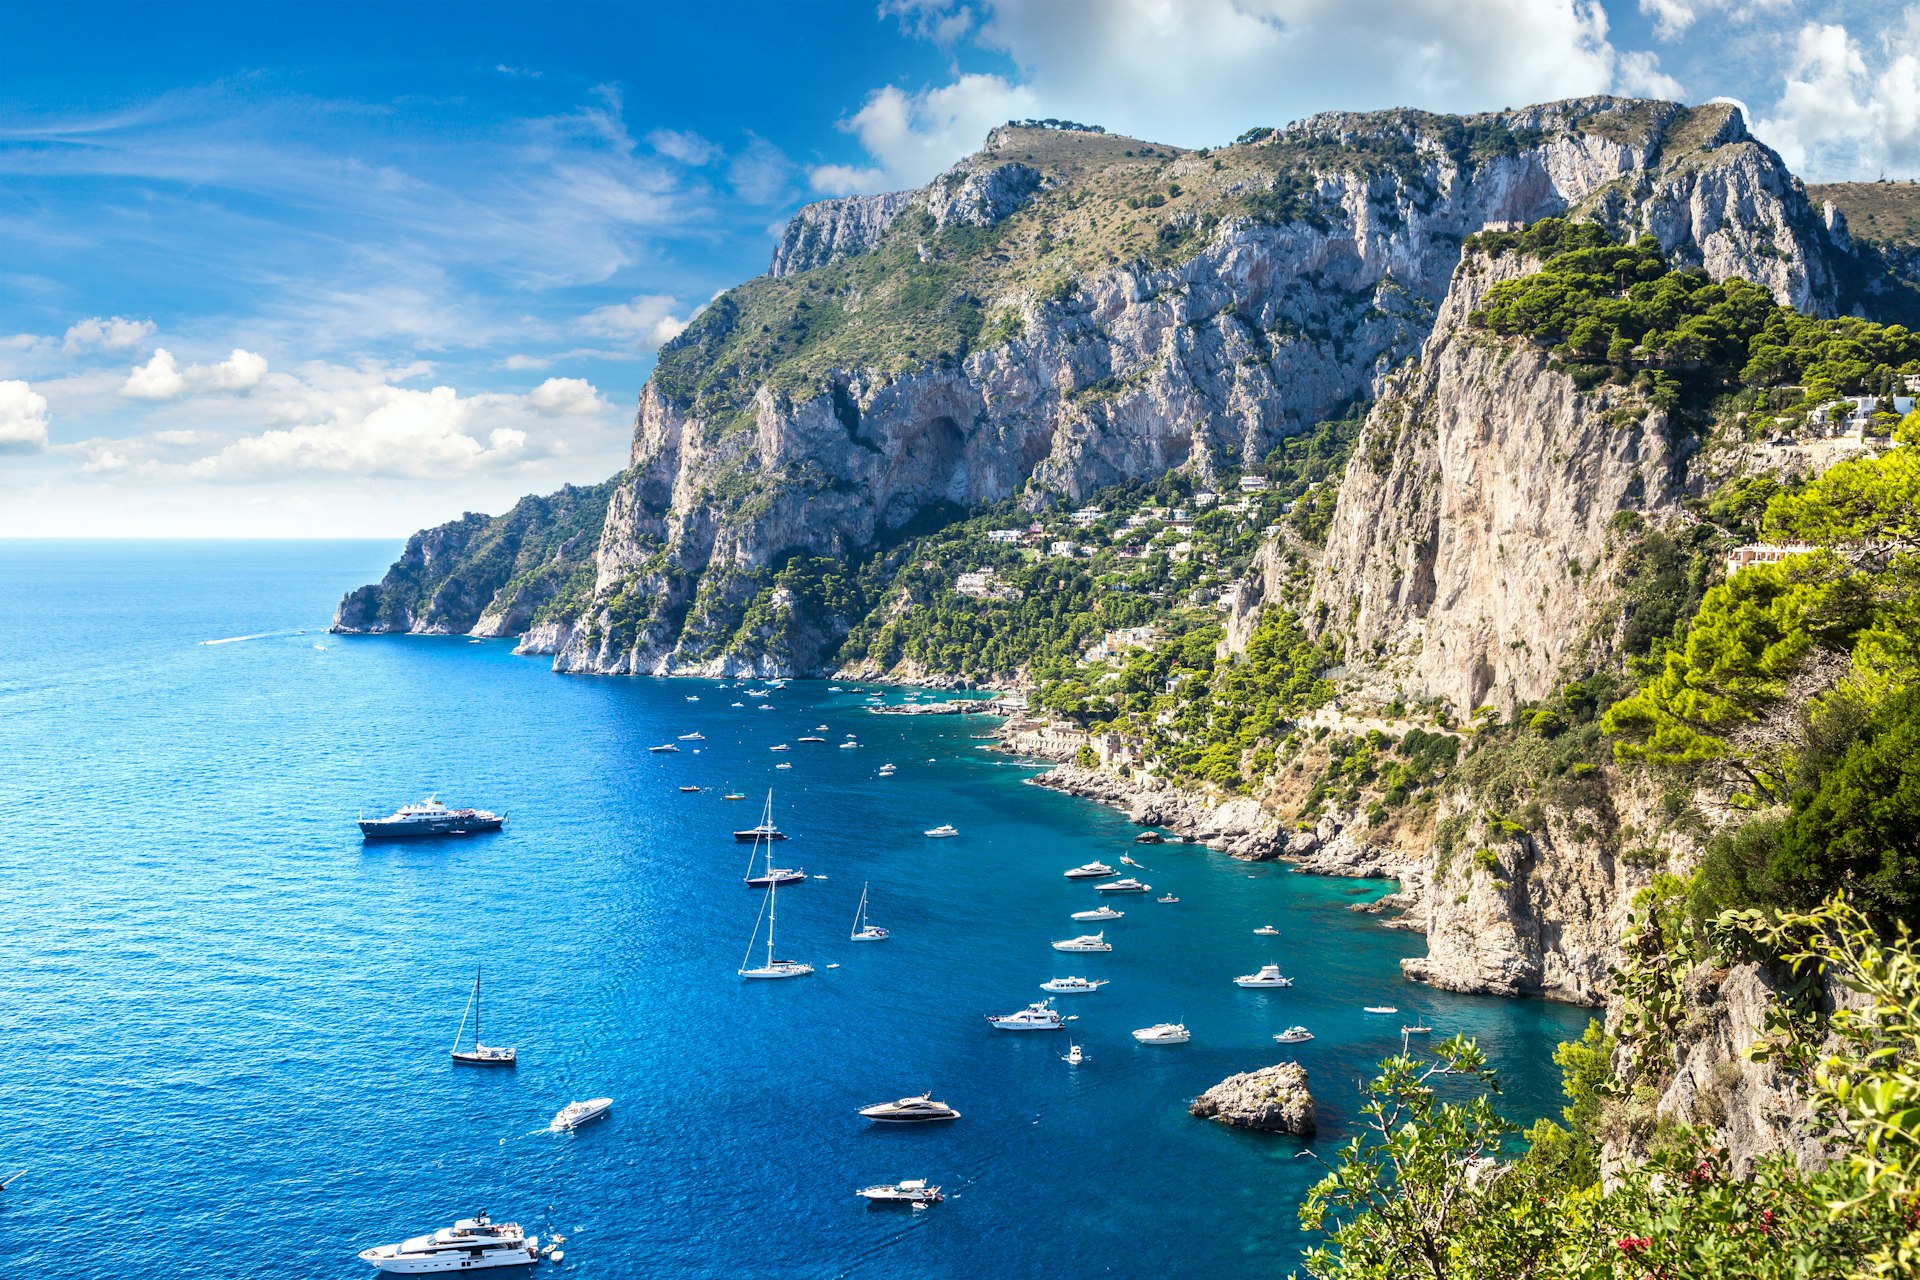 Sailing boats in a sunny bay in Capri